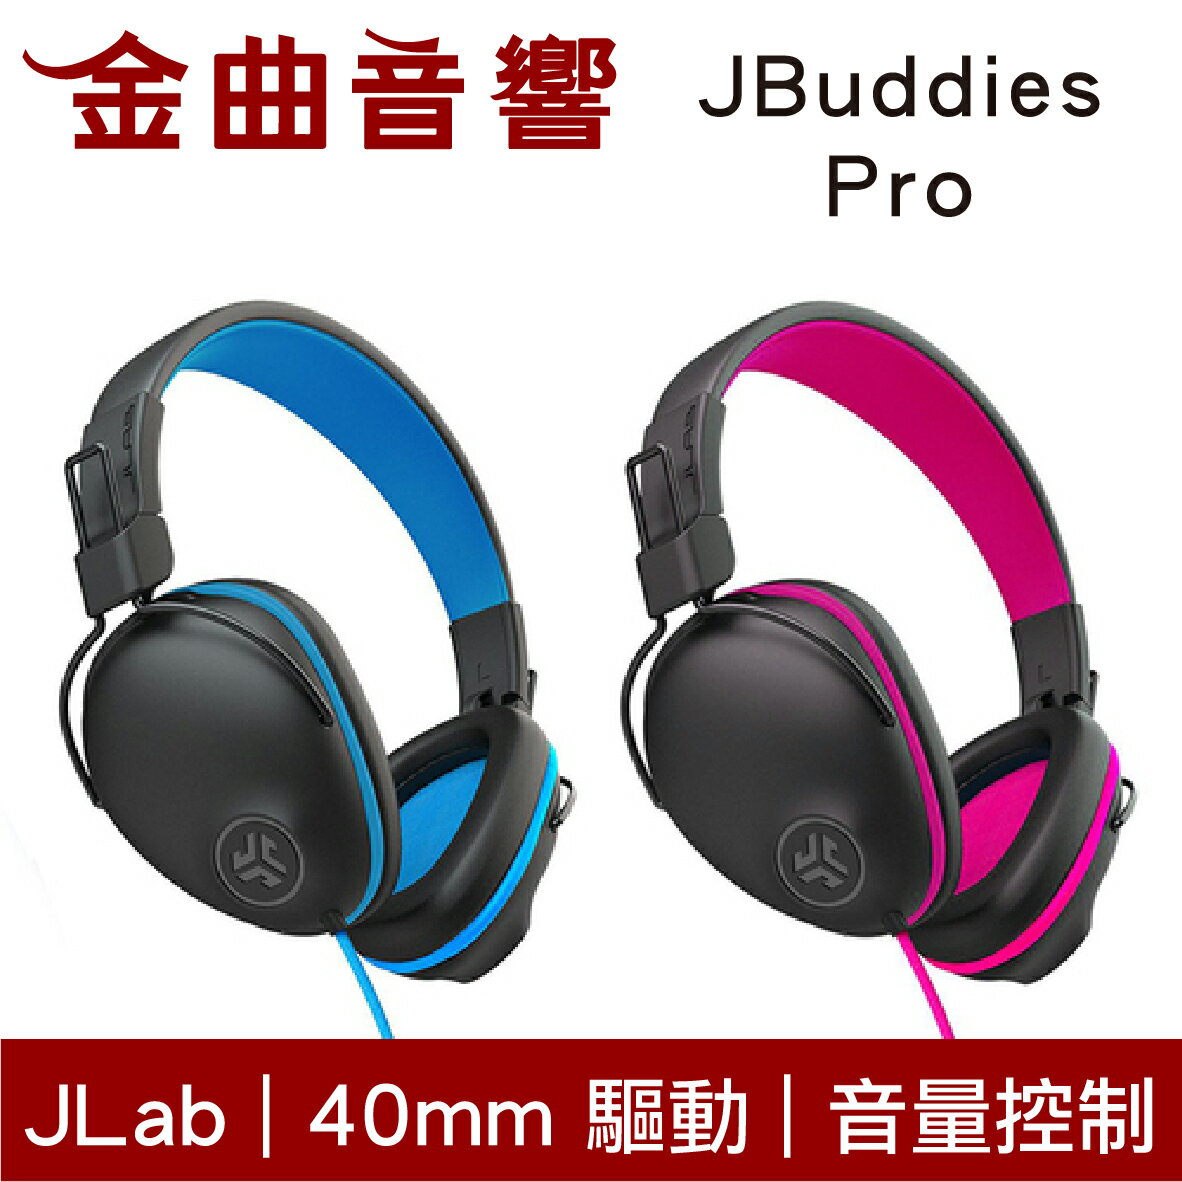 JLAB JBuddies Pro 線控 音量控制 內建麥克風 40mm驅動 兒童 青少年 耳罩式 耳機 | 金曲音響